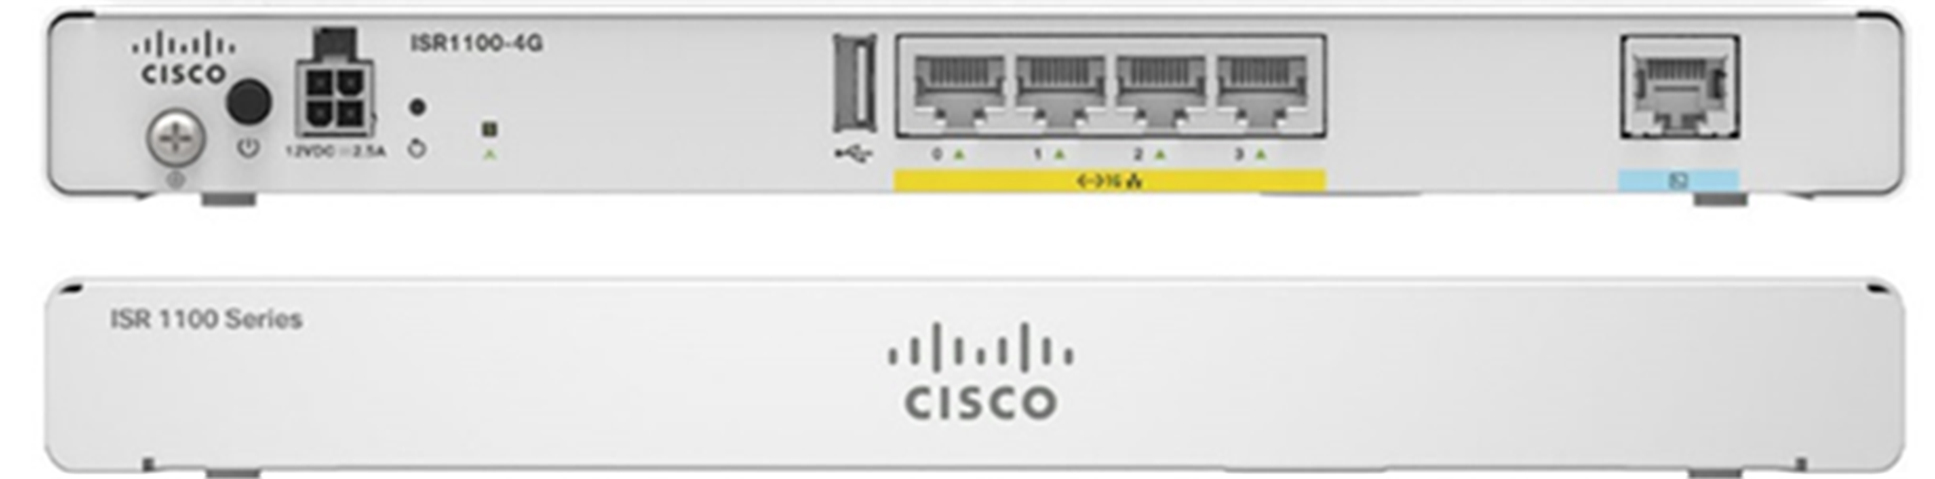 Photos - Router Cisco ISR1100-4G wired  Gigabit Ethernet Grey 